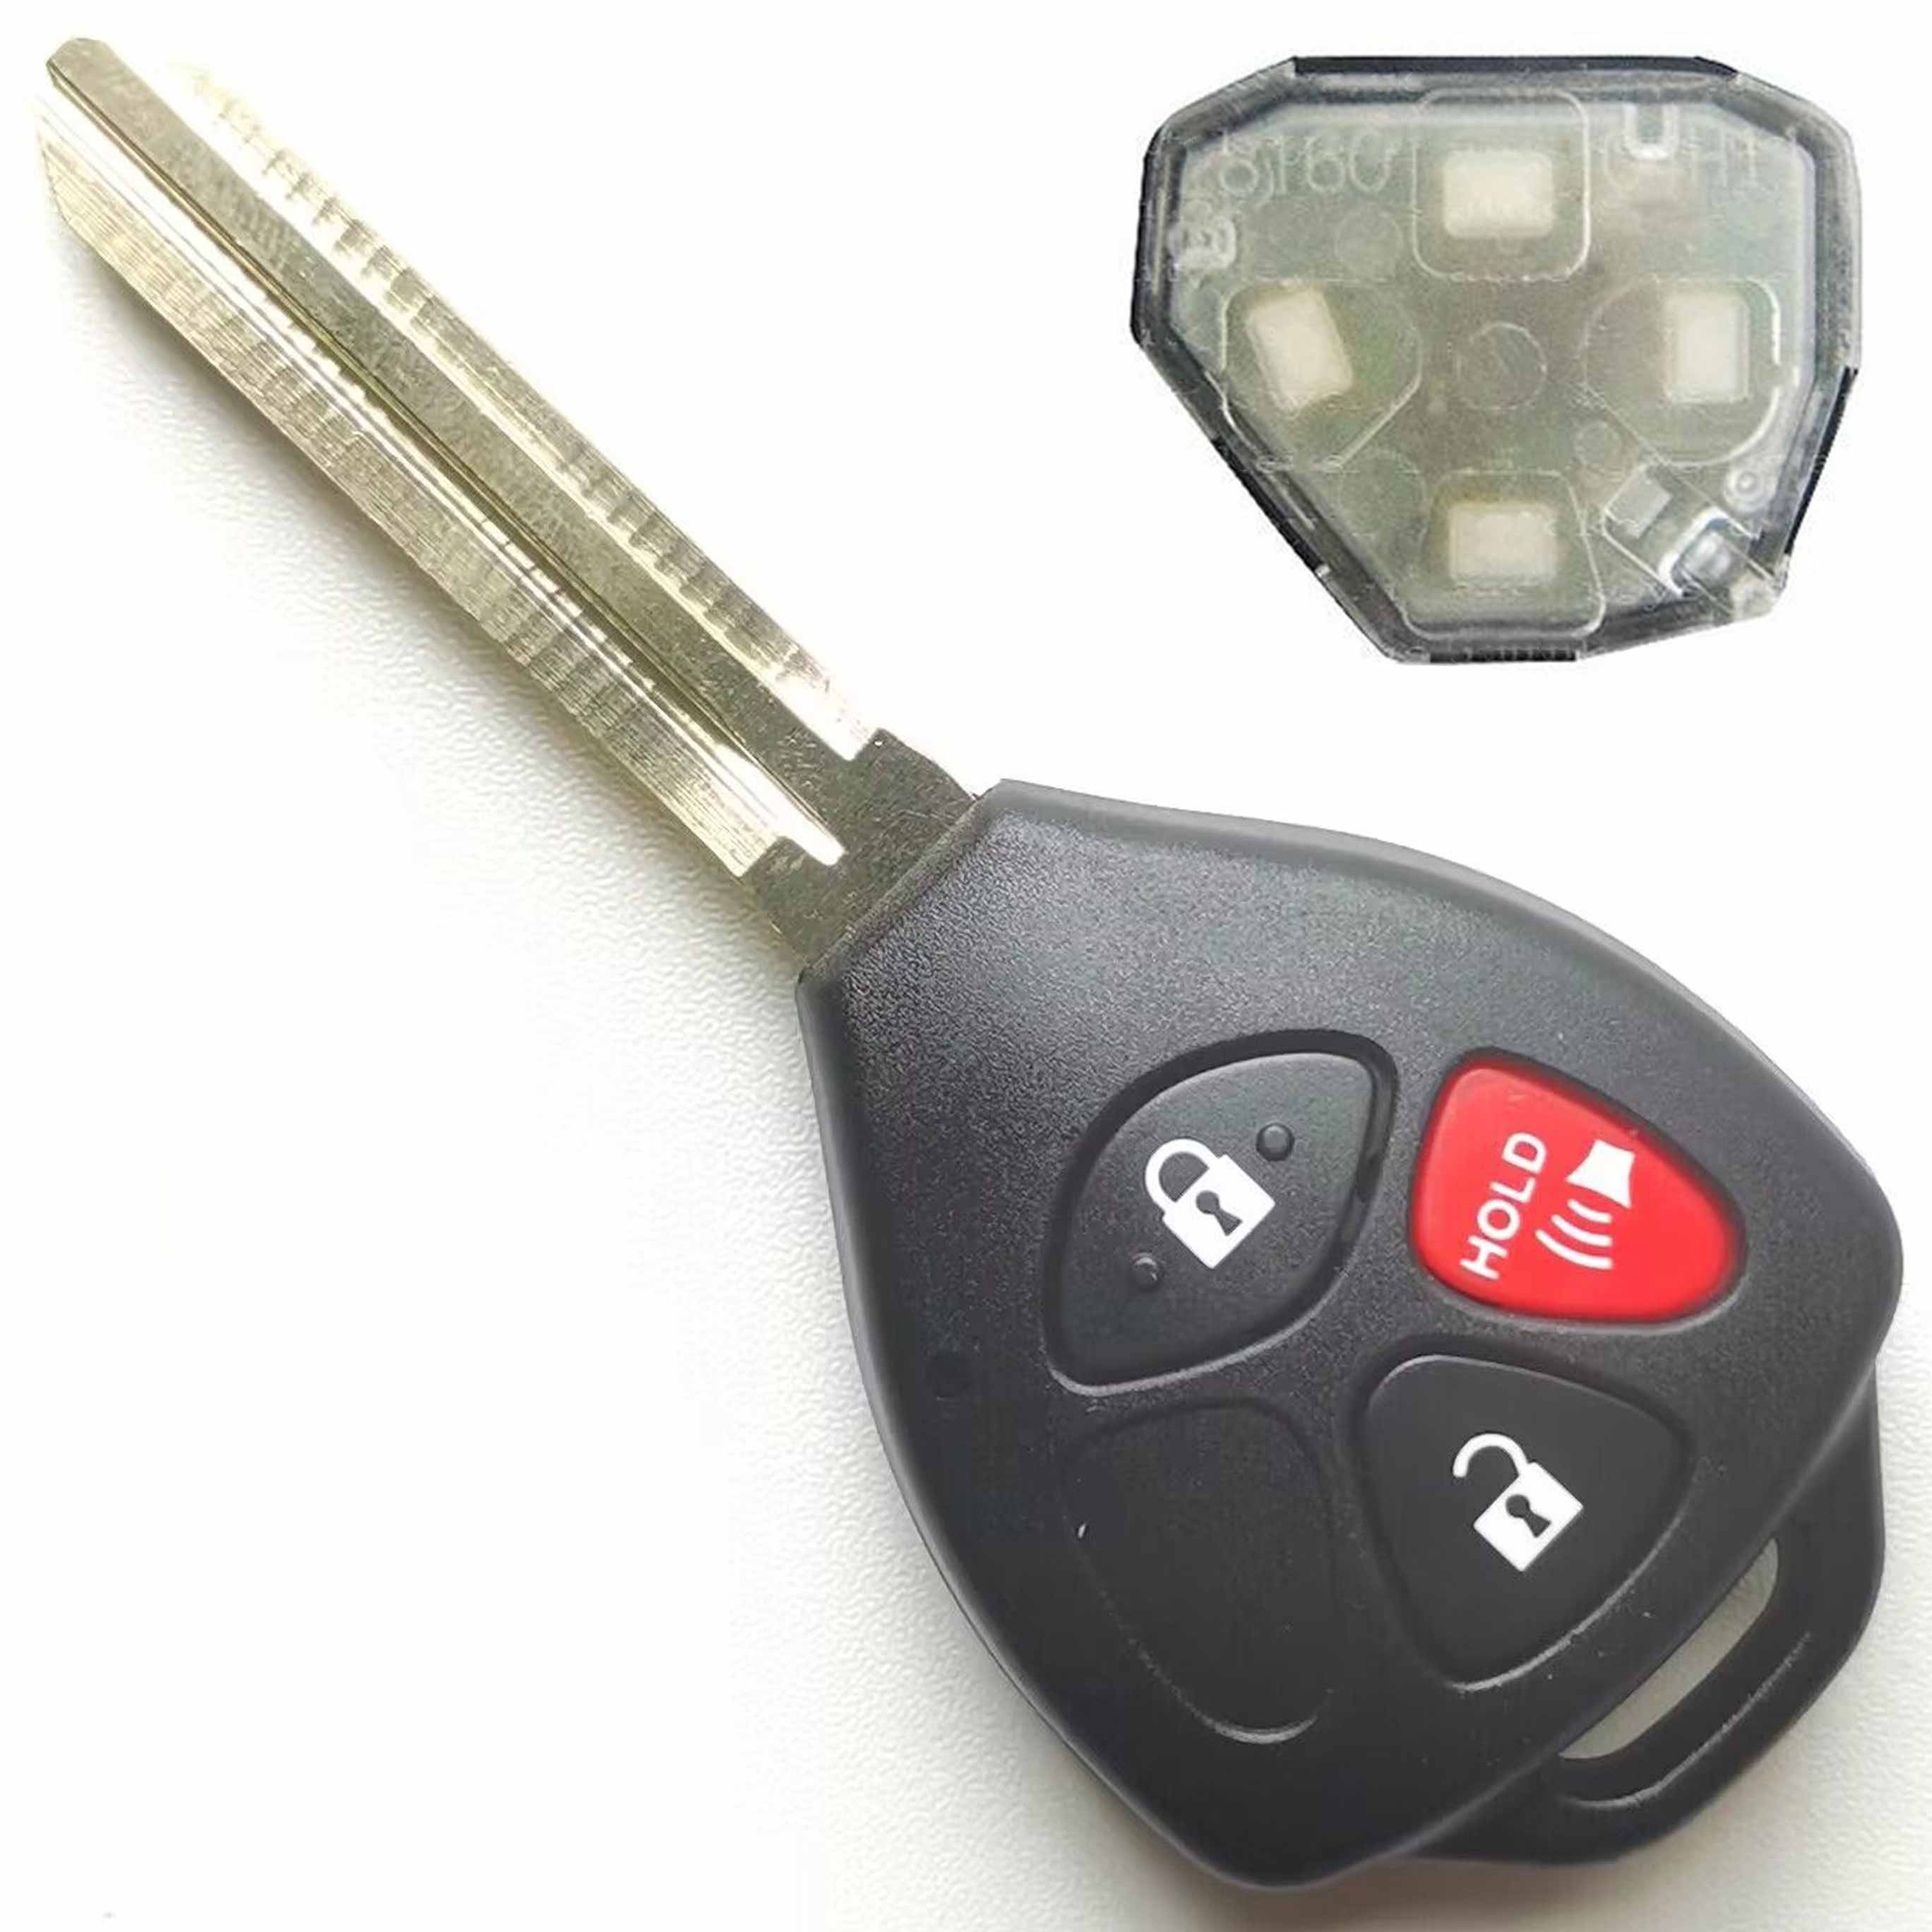 315 MHz Remote Key for Toyota Corolla Matrix / GQ4-29T / G Chip